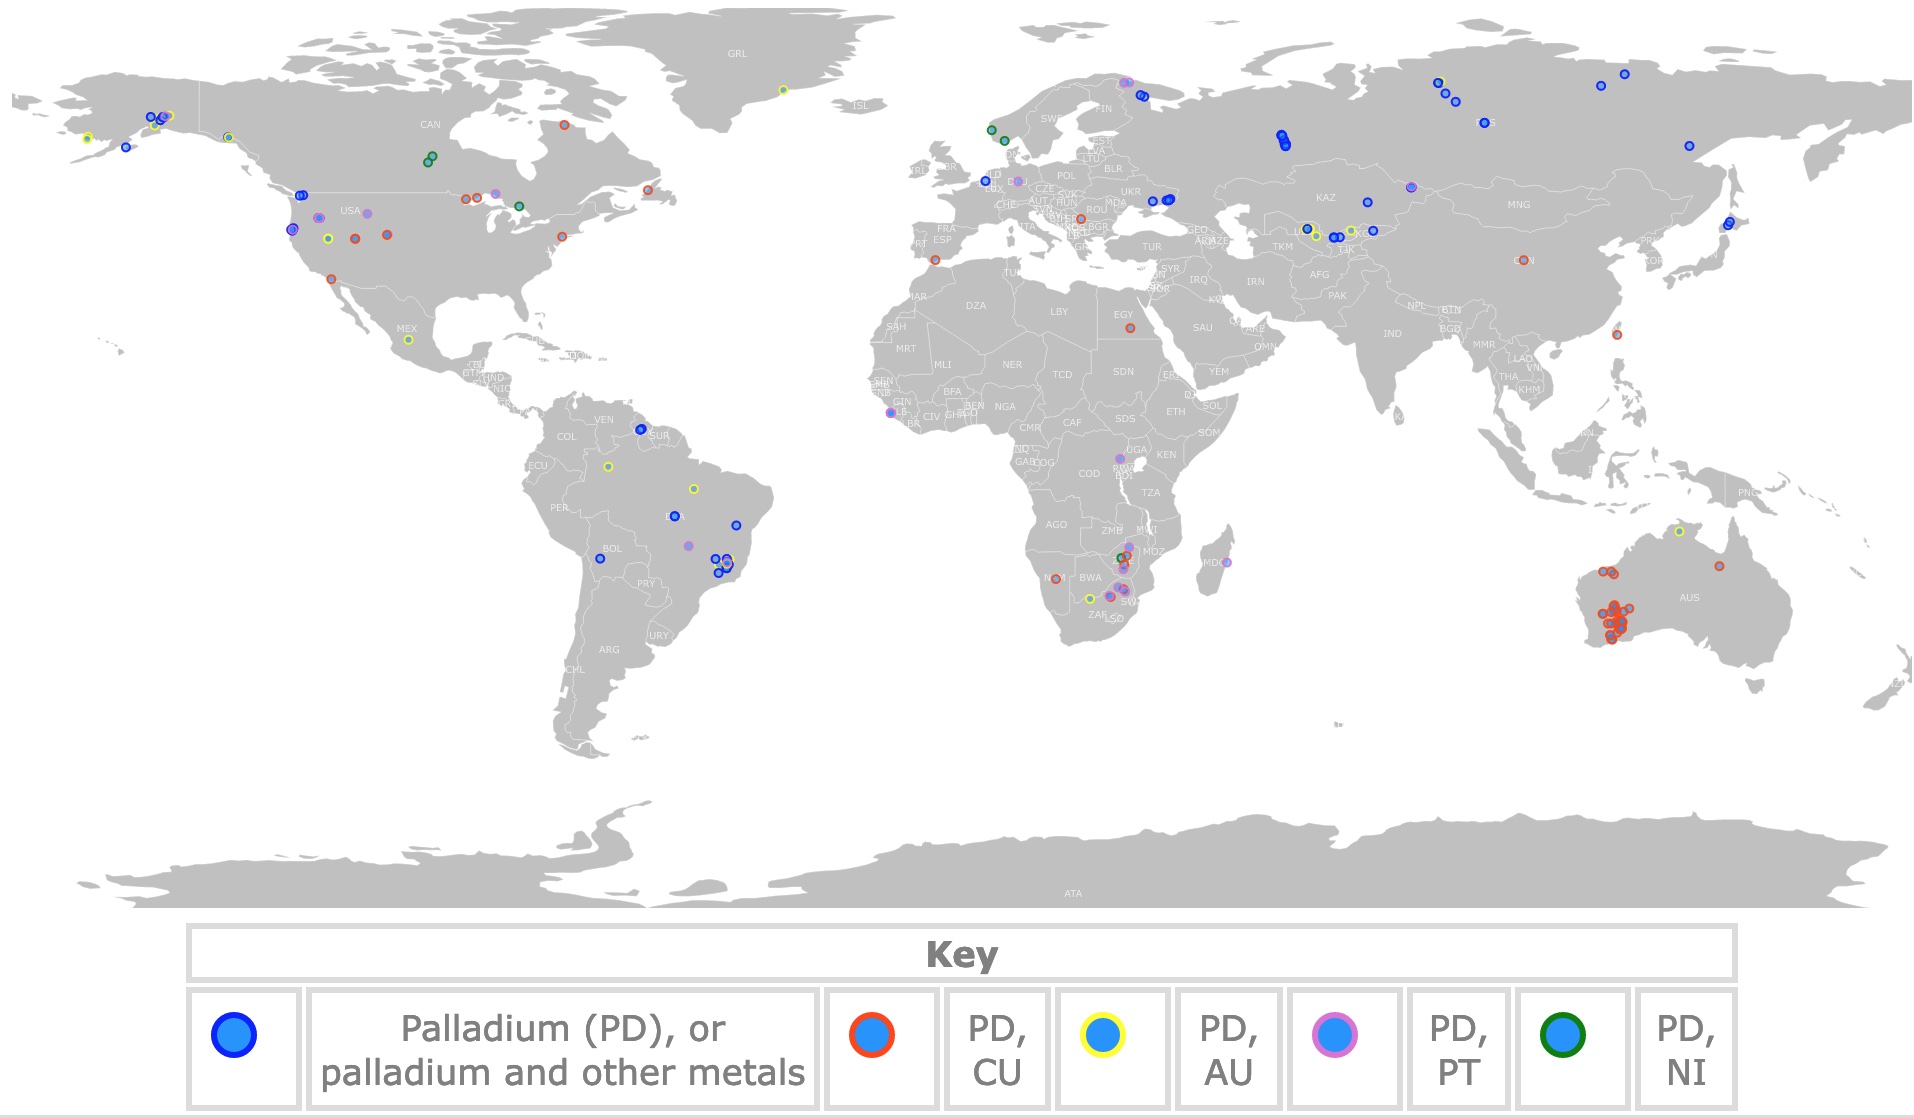 Map of Palladium Deposits worldwide